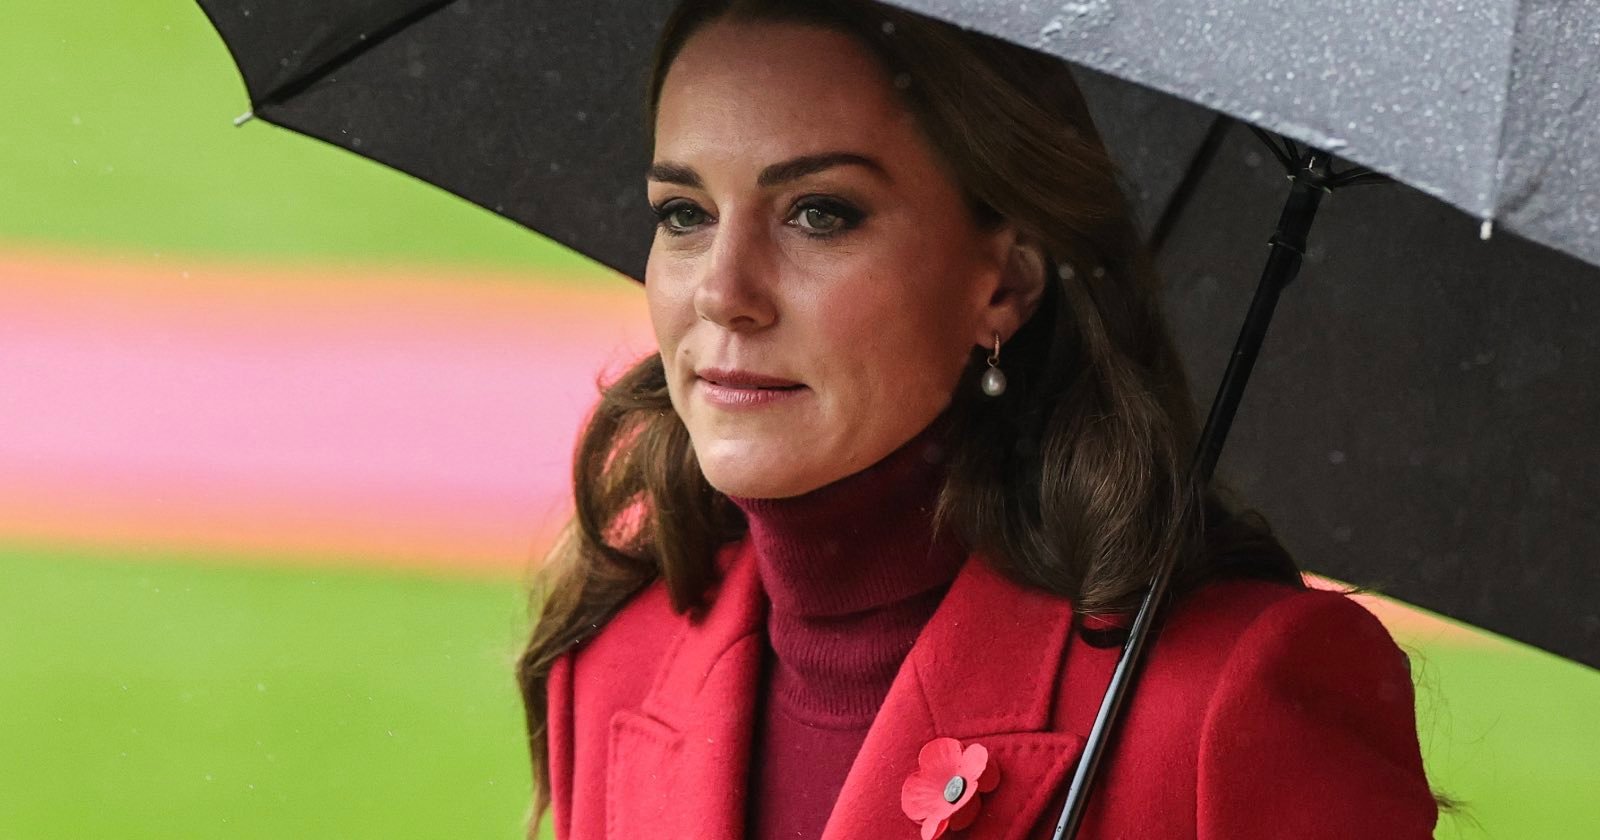 Photographer Who Captured Kate Middleton This Week Denies Image is Photoshopped